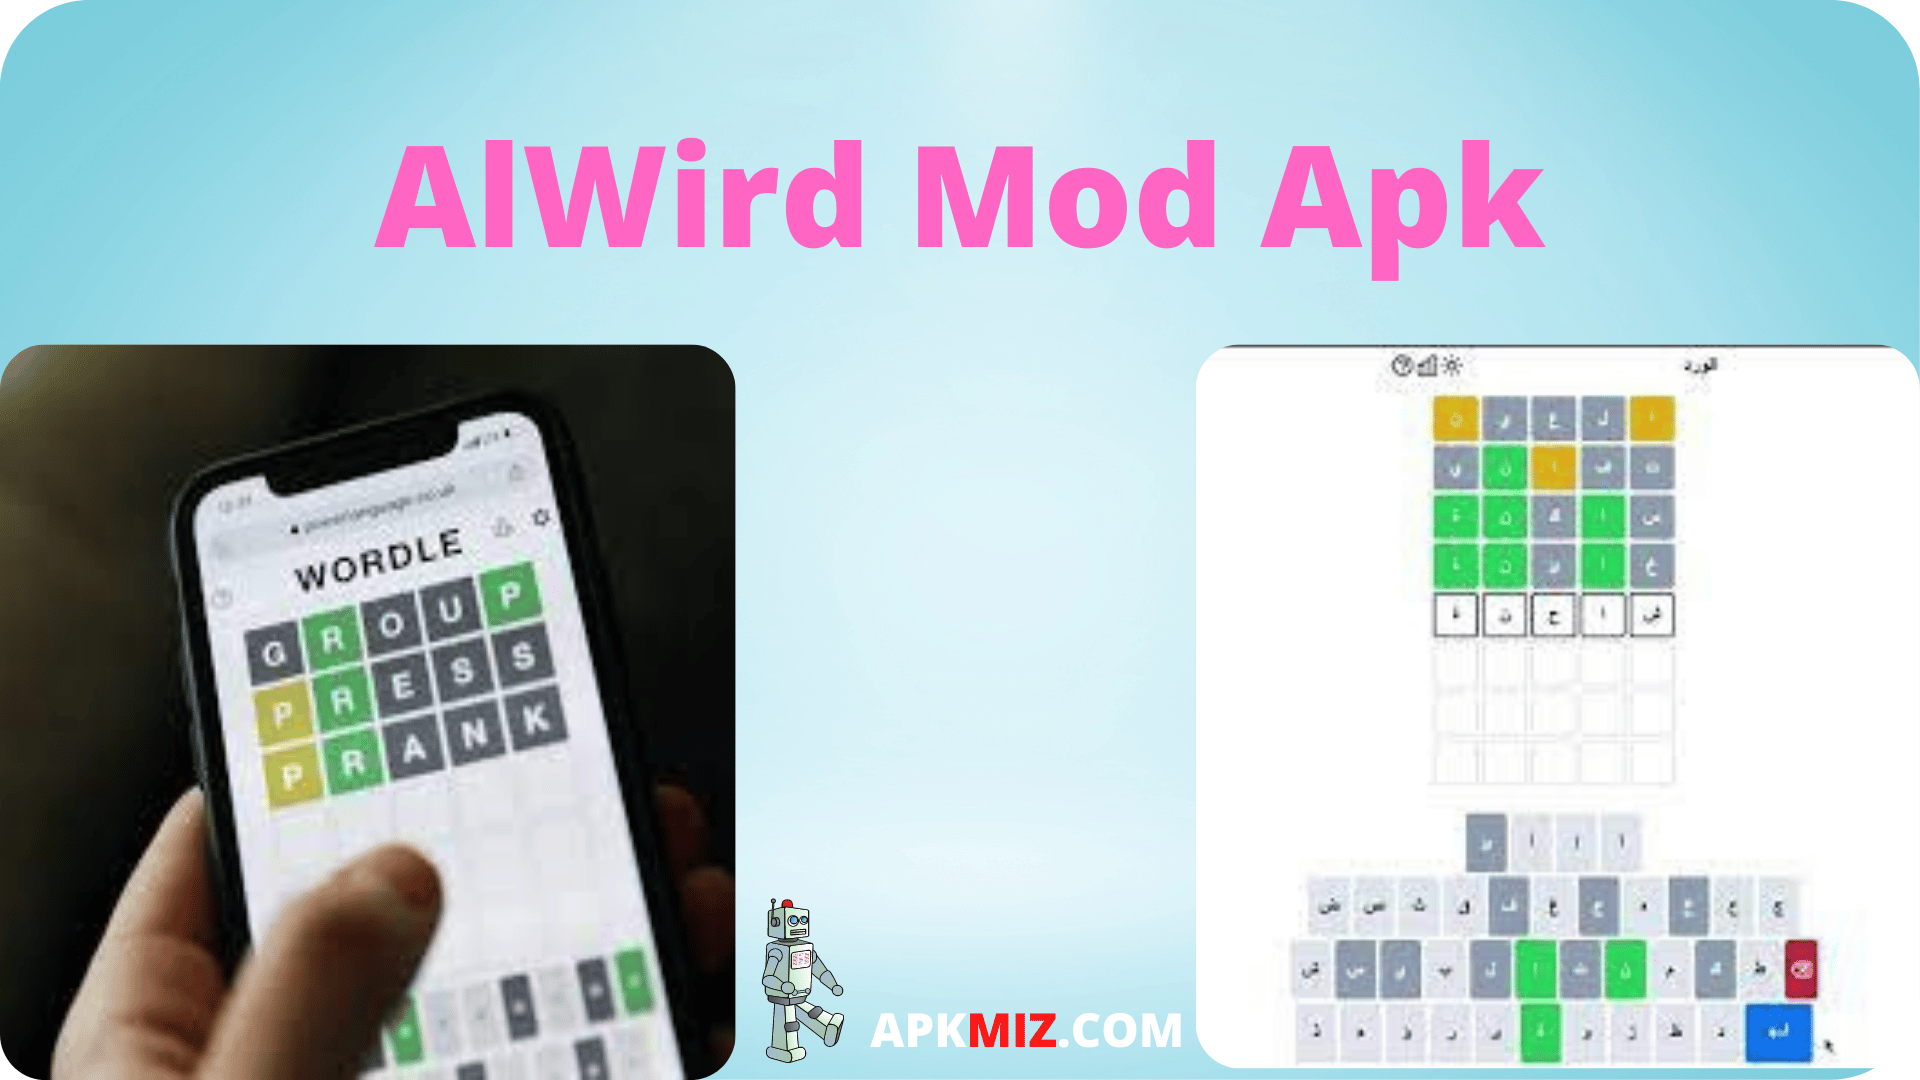 AlWird Mod Apk